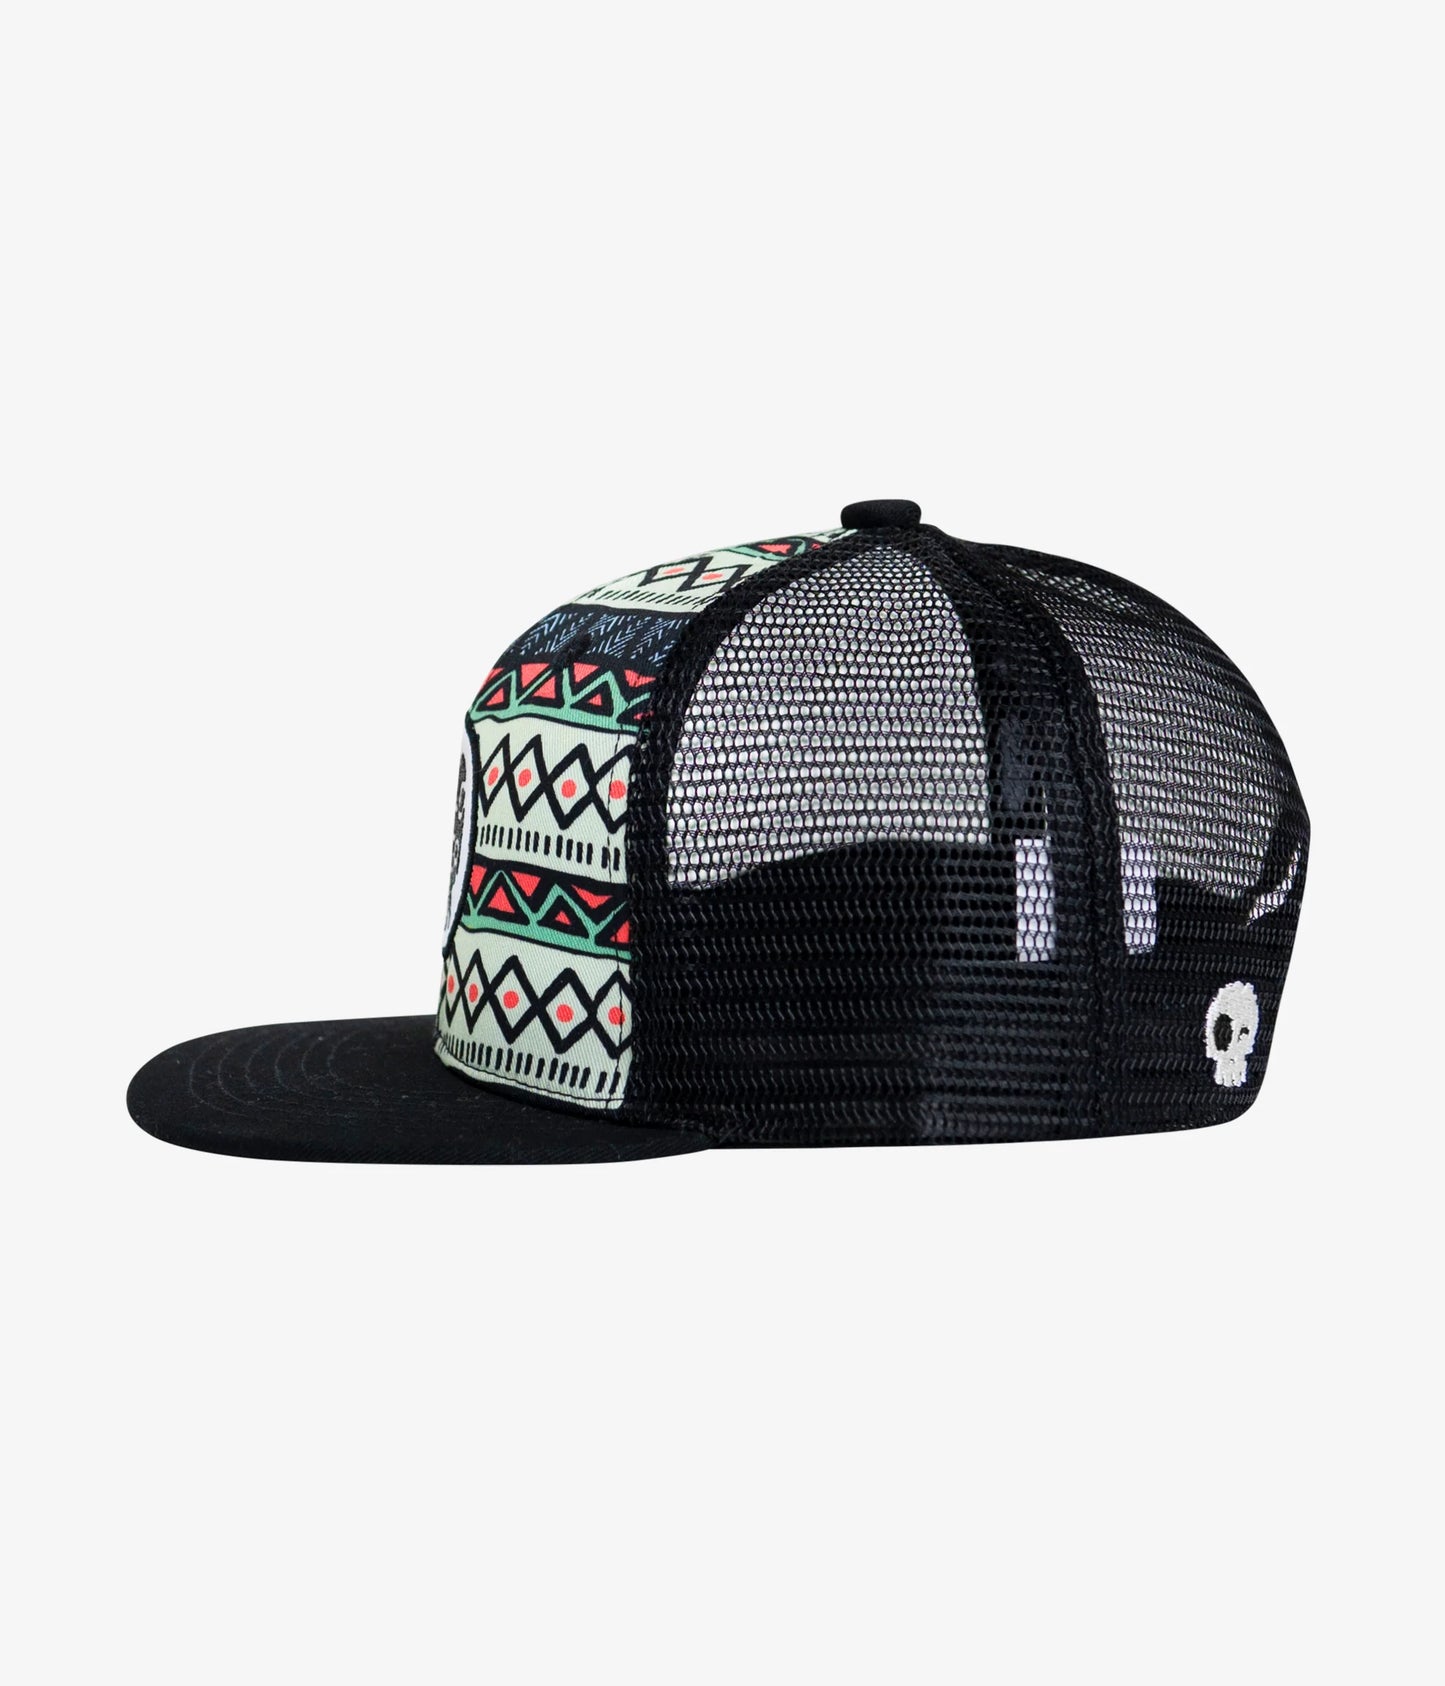 Hat (Snapback) - Azteca Black